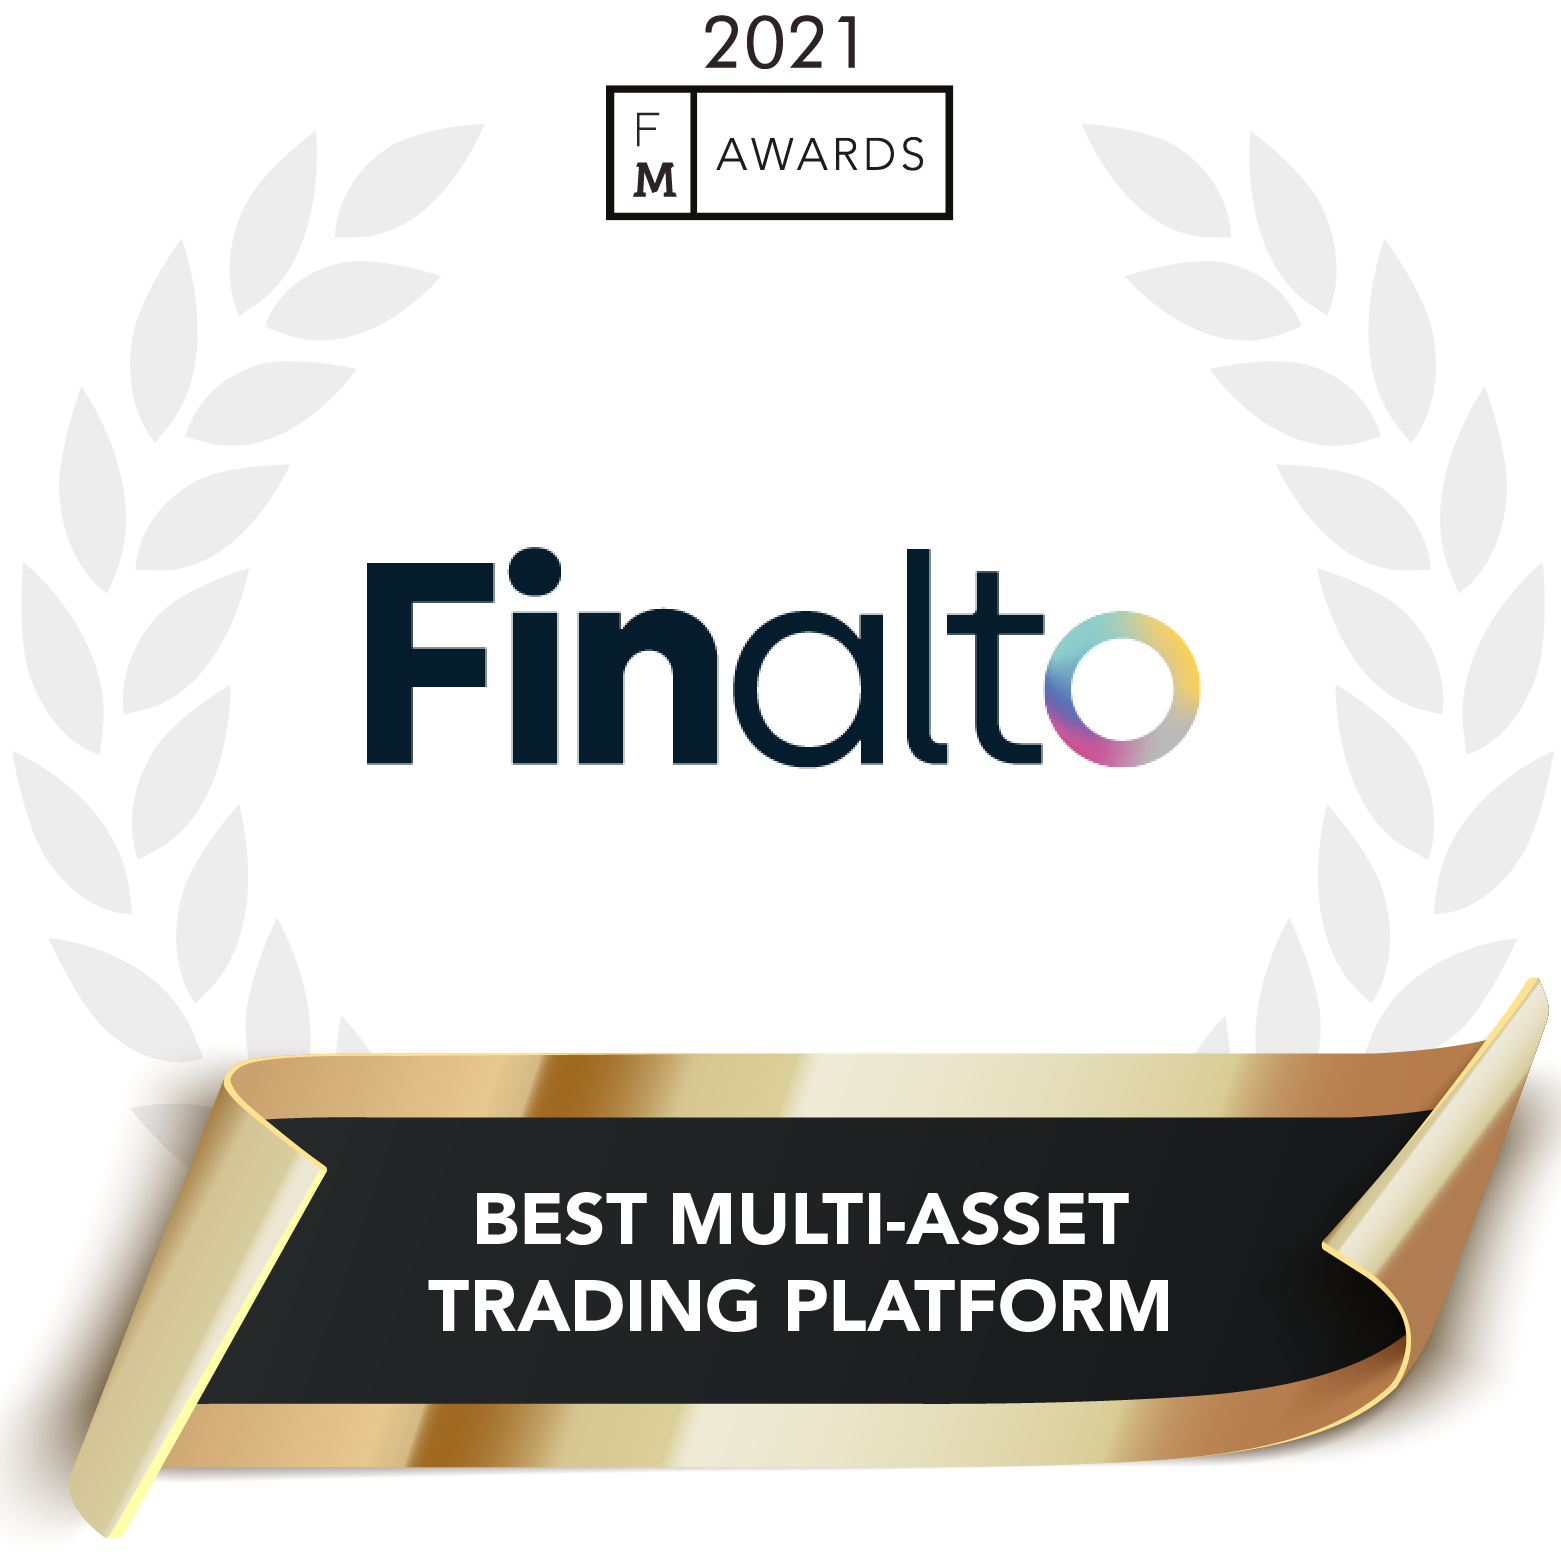 Finalto award: Best Multi-Asset Trading Platform